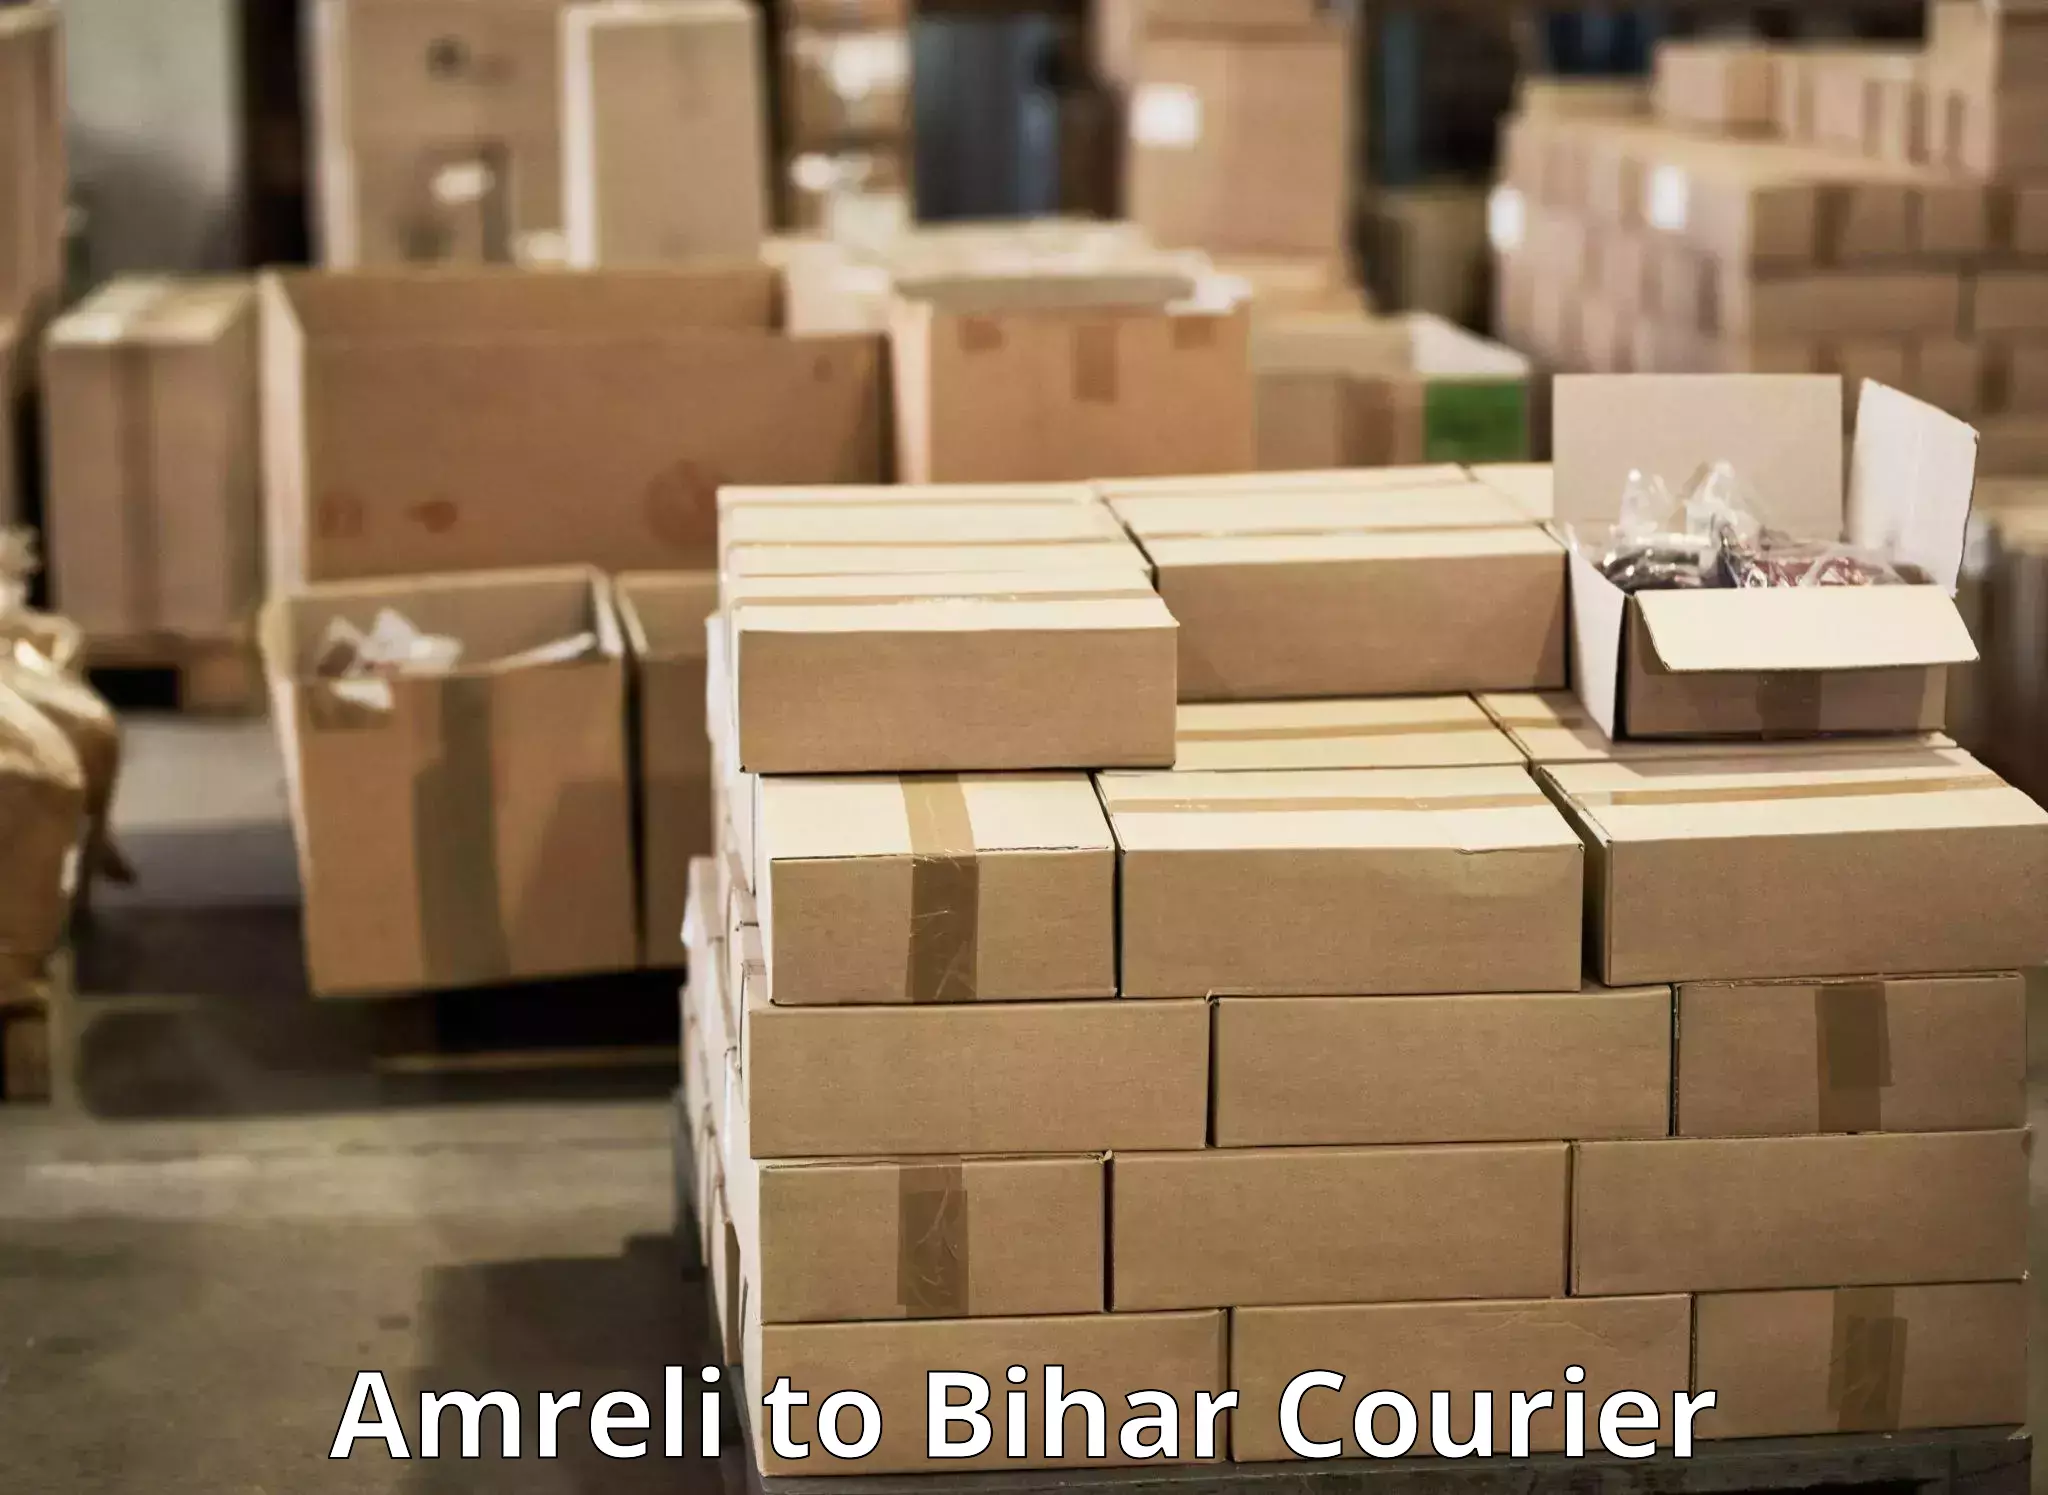 User-friendly courier app Amreli to Dhaka